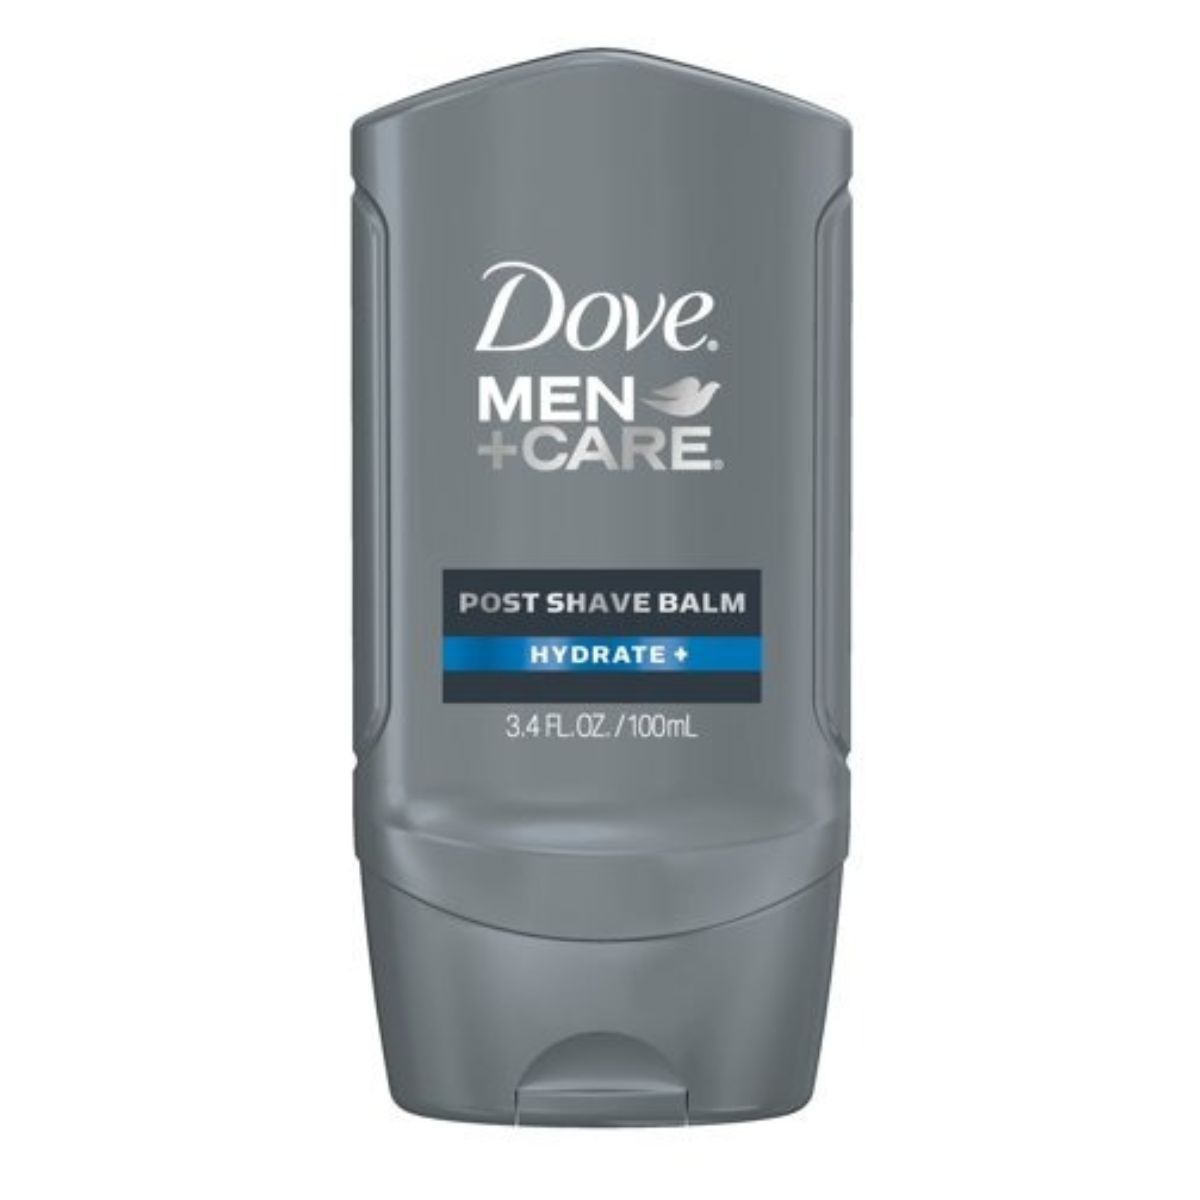 Men+Care Post Shave Balm